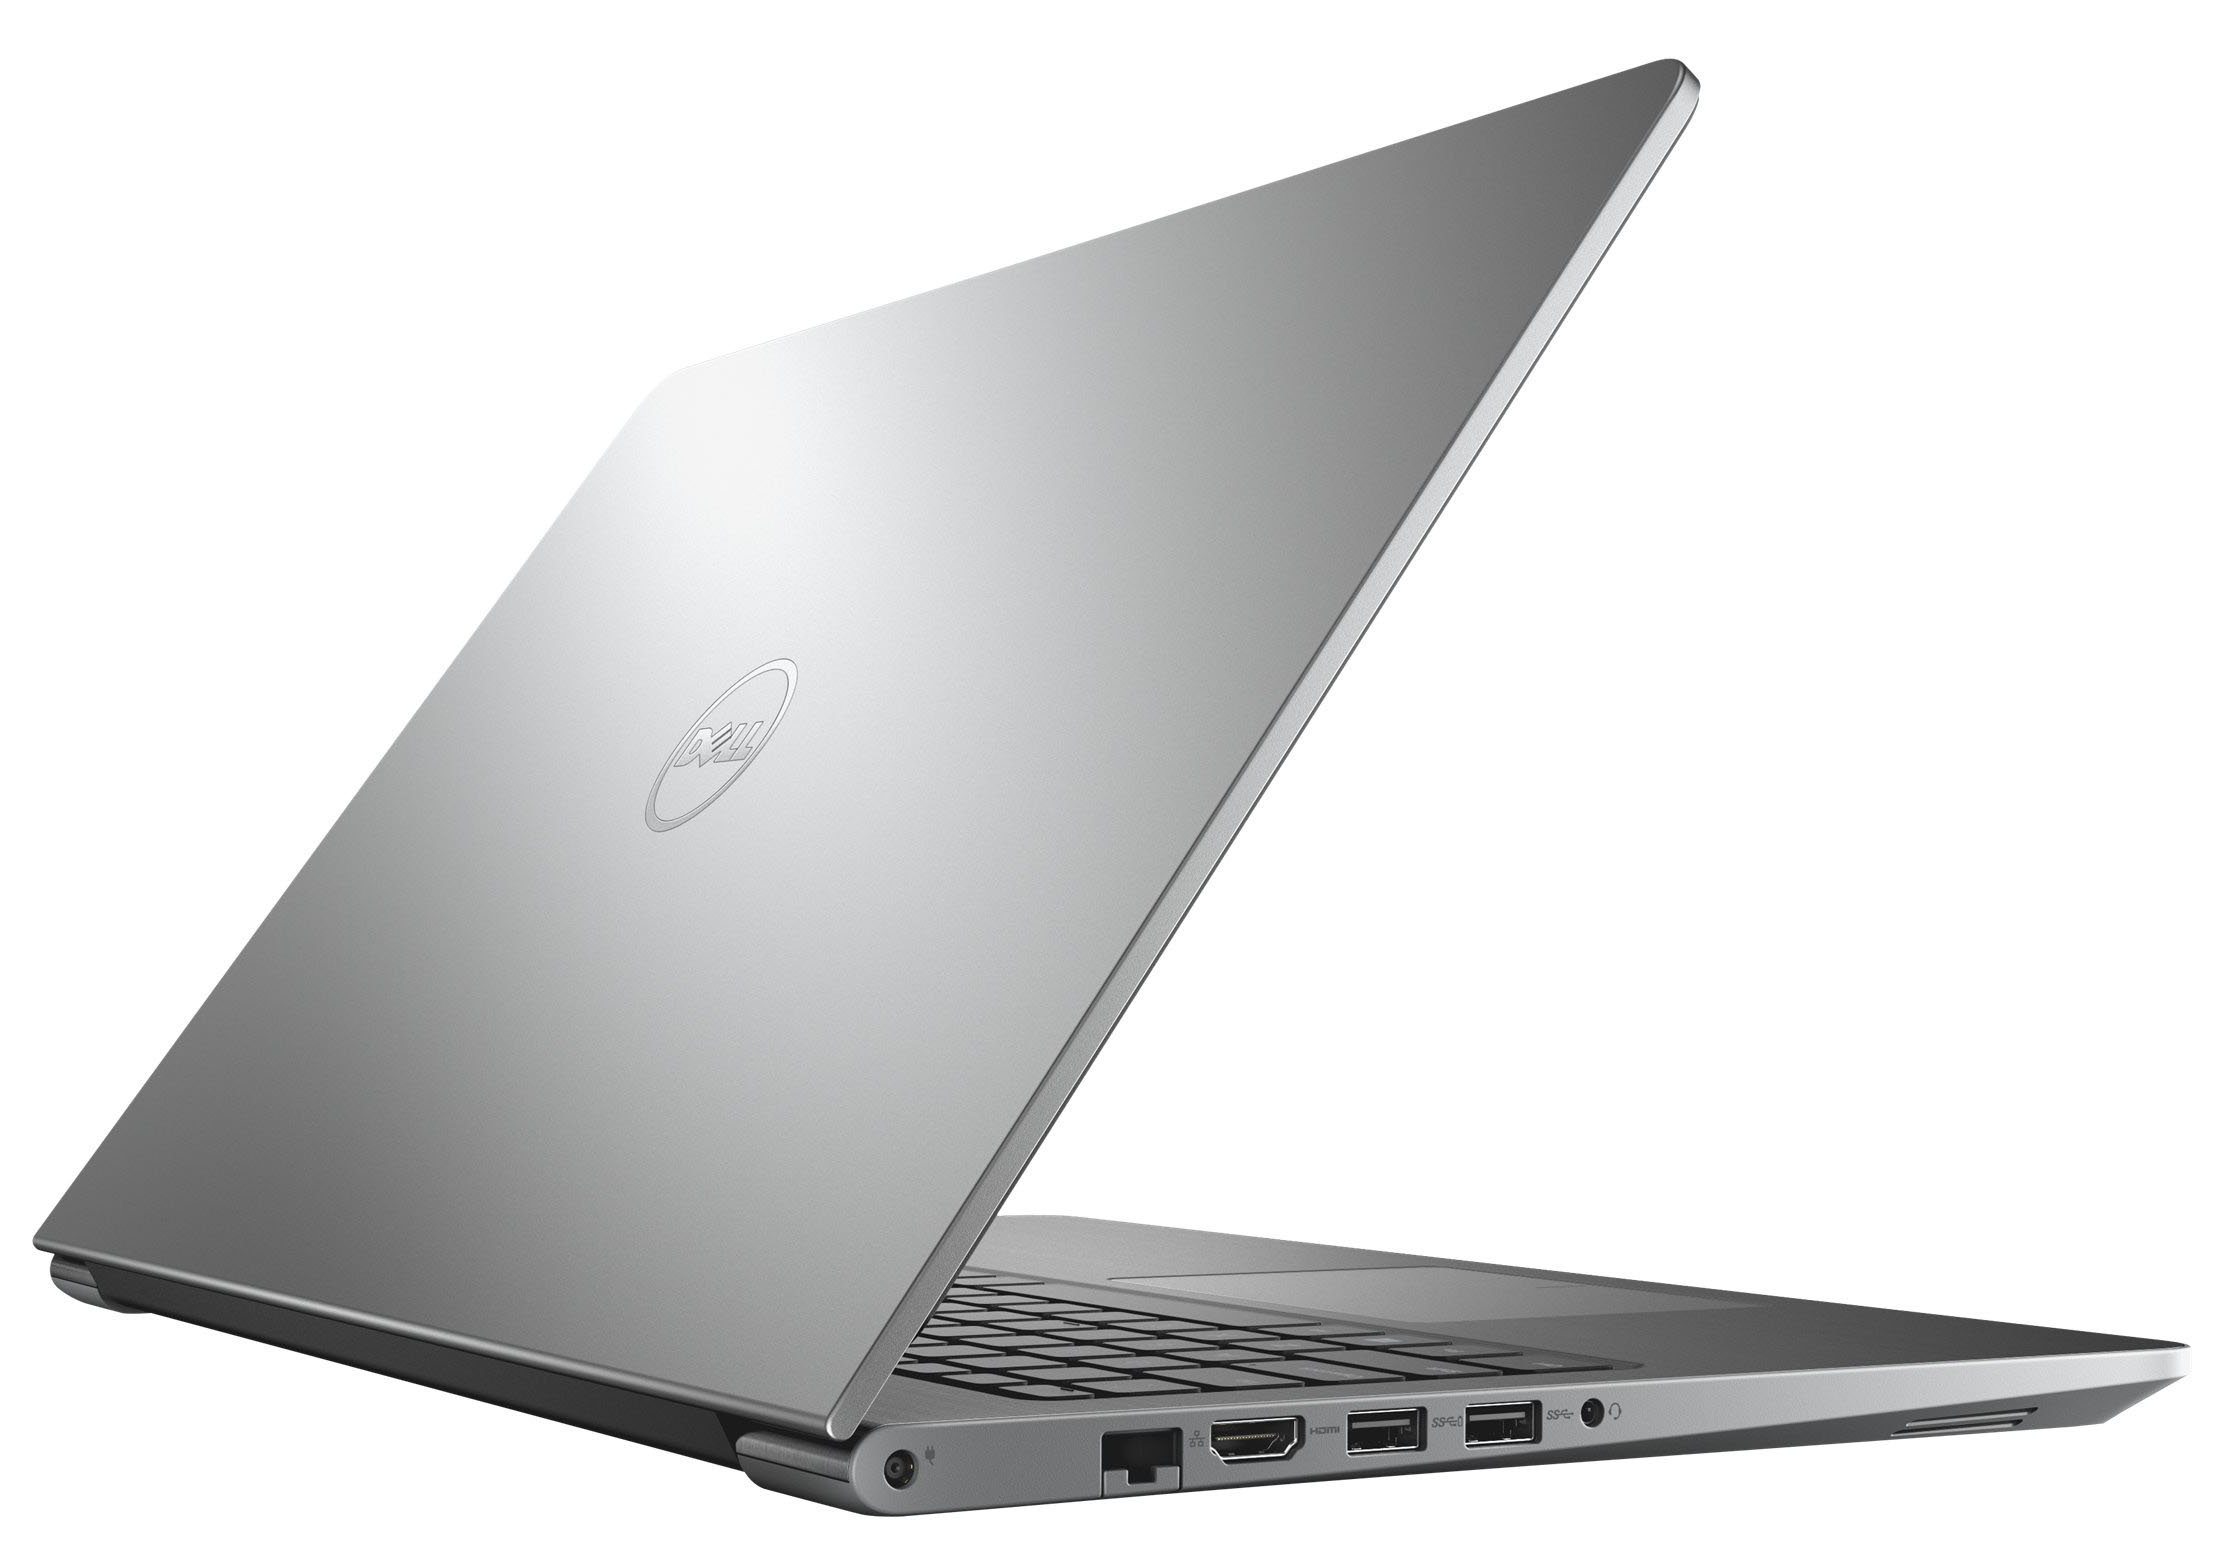 Dell Vostro 15 5568 - Specs, Tests, and Prices | LaptopMedia.com